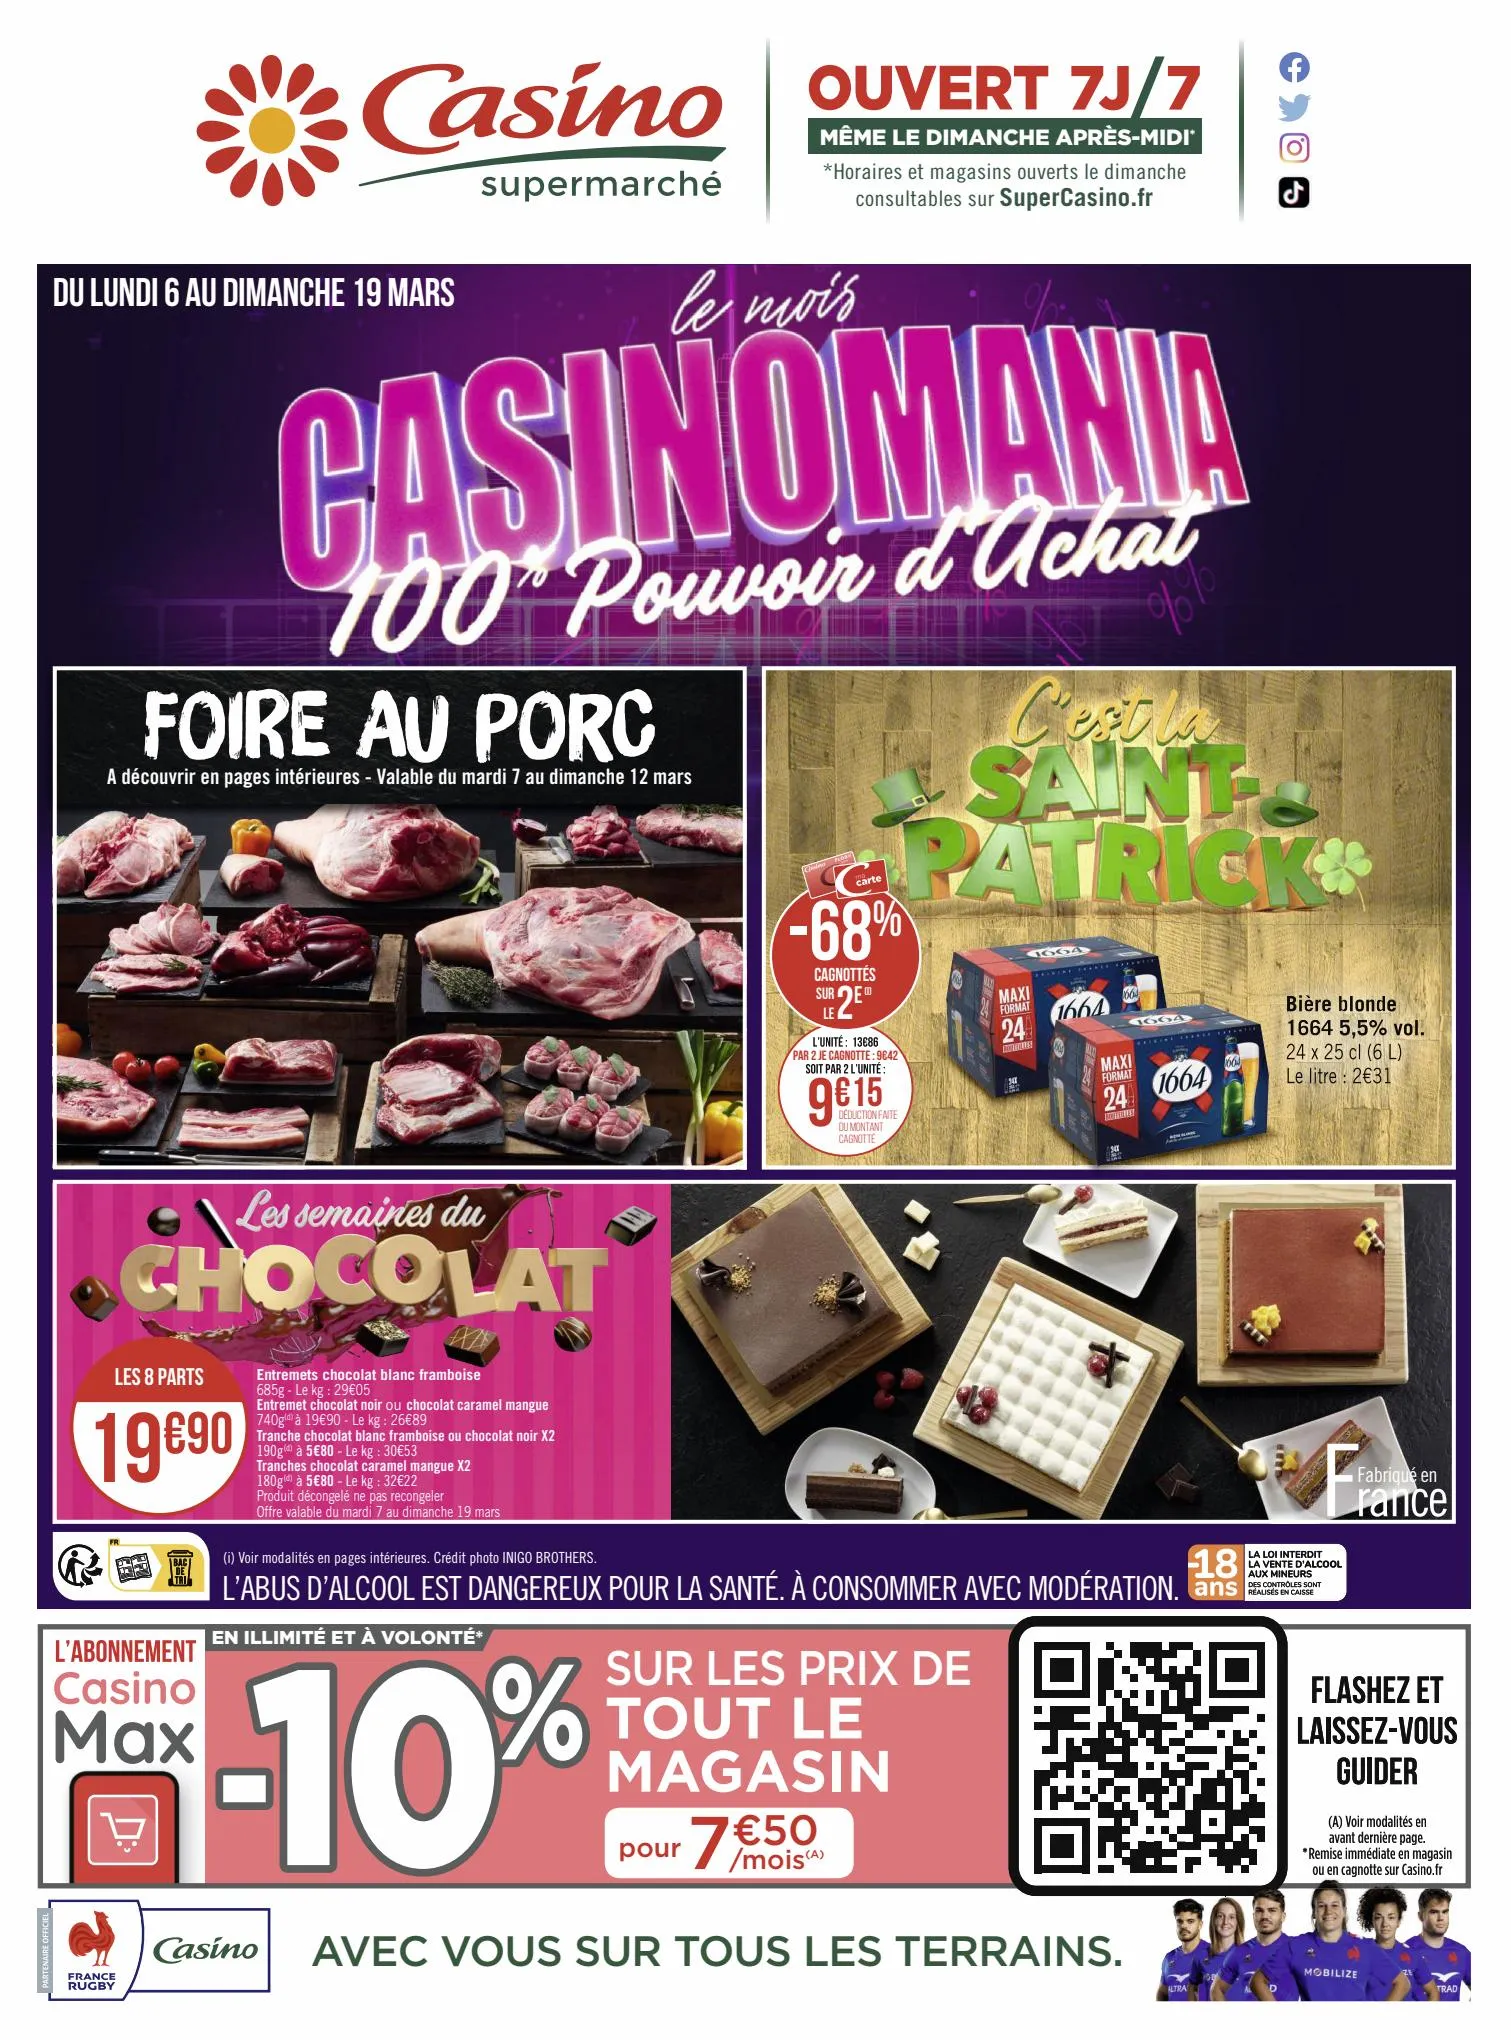 Catalogue Catalogue Casino Supermarchés, page 00044